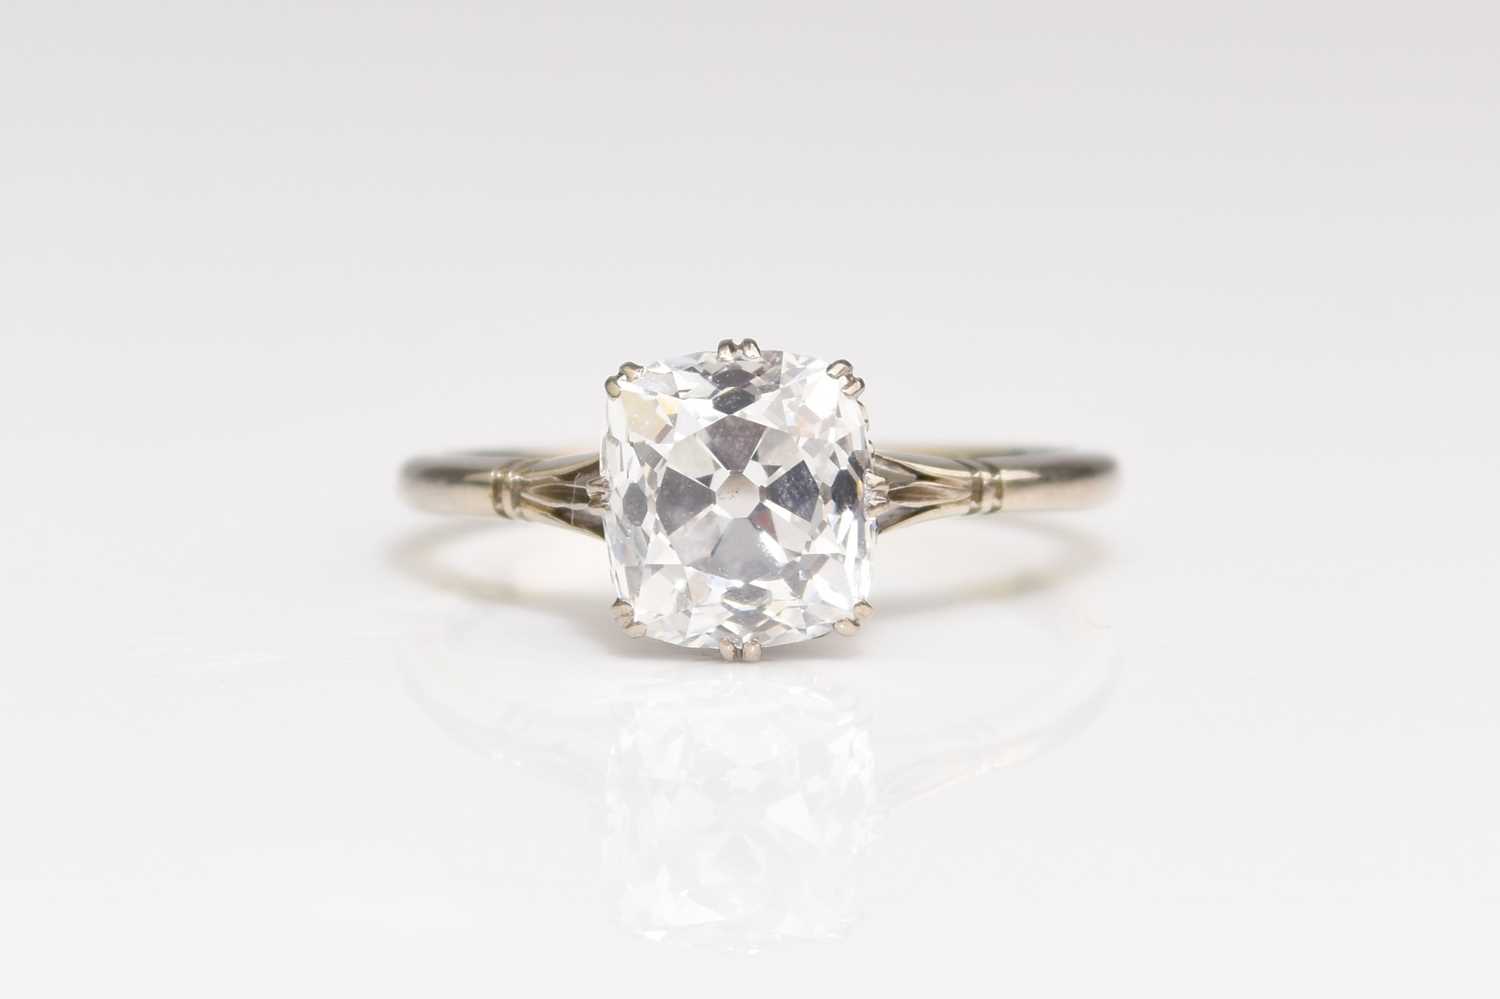 33 - An early-mid 20th century single stone diamond ring